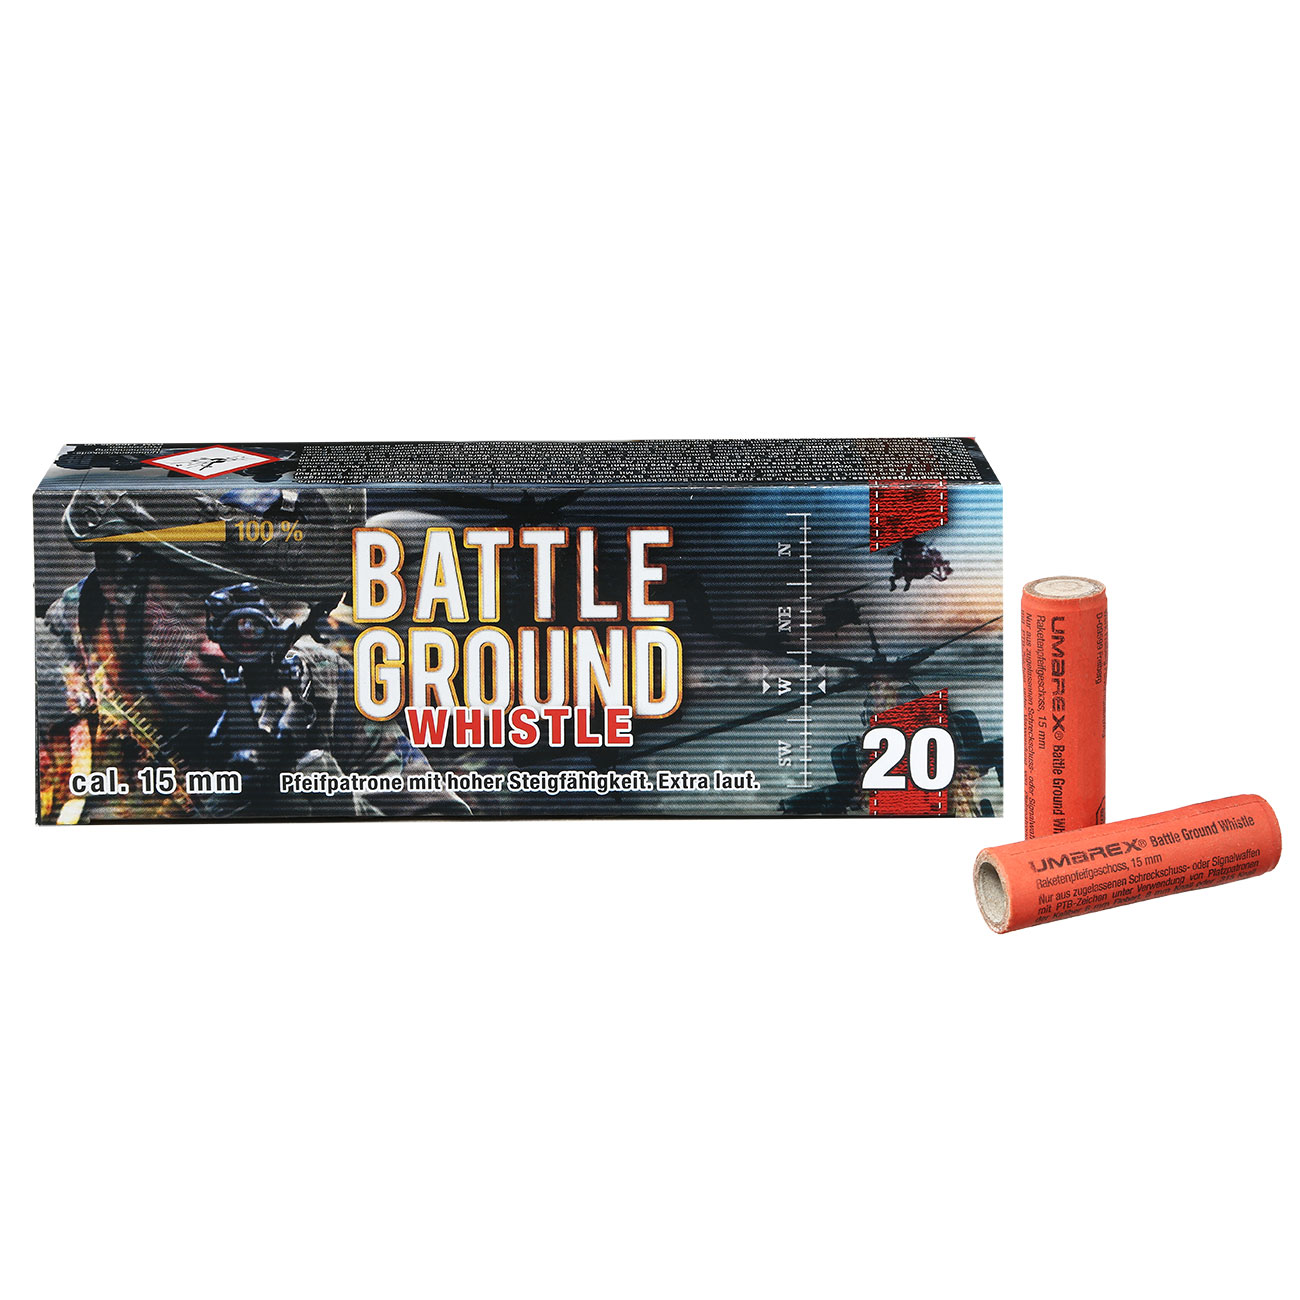 Battle Ground Whistle Raketenpfeifgeschosse 20 Stück Bild 1